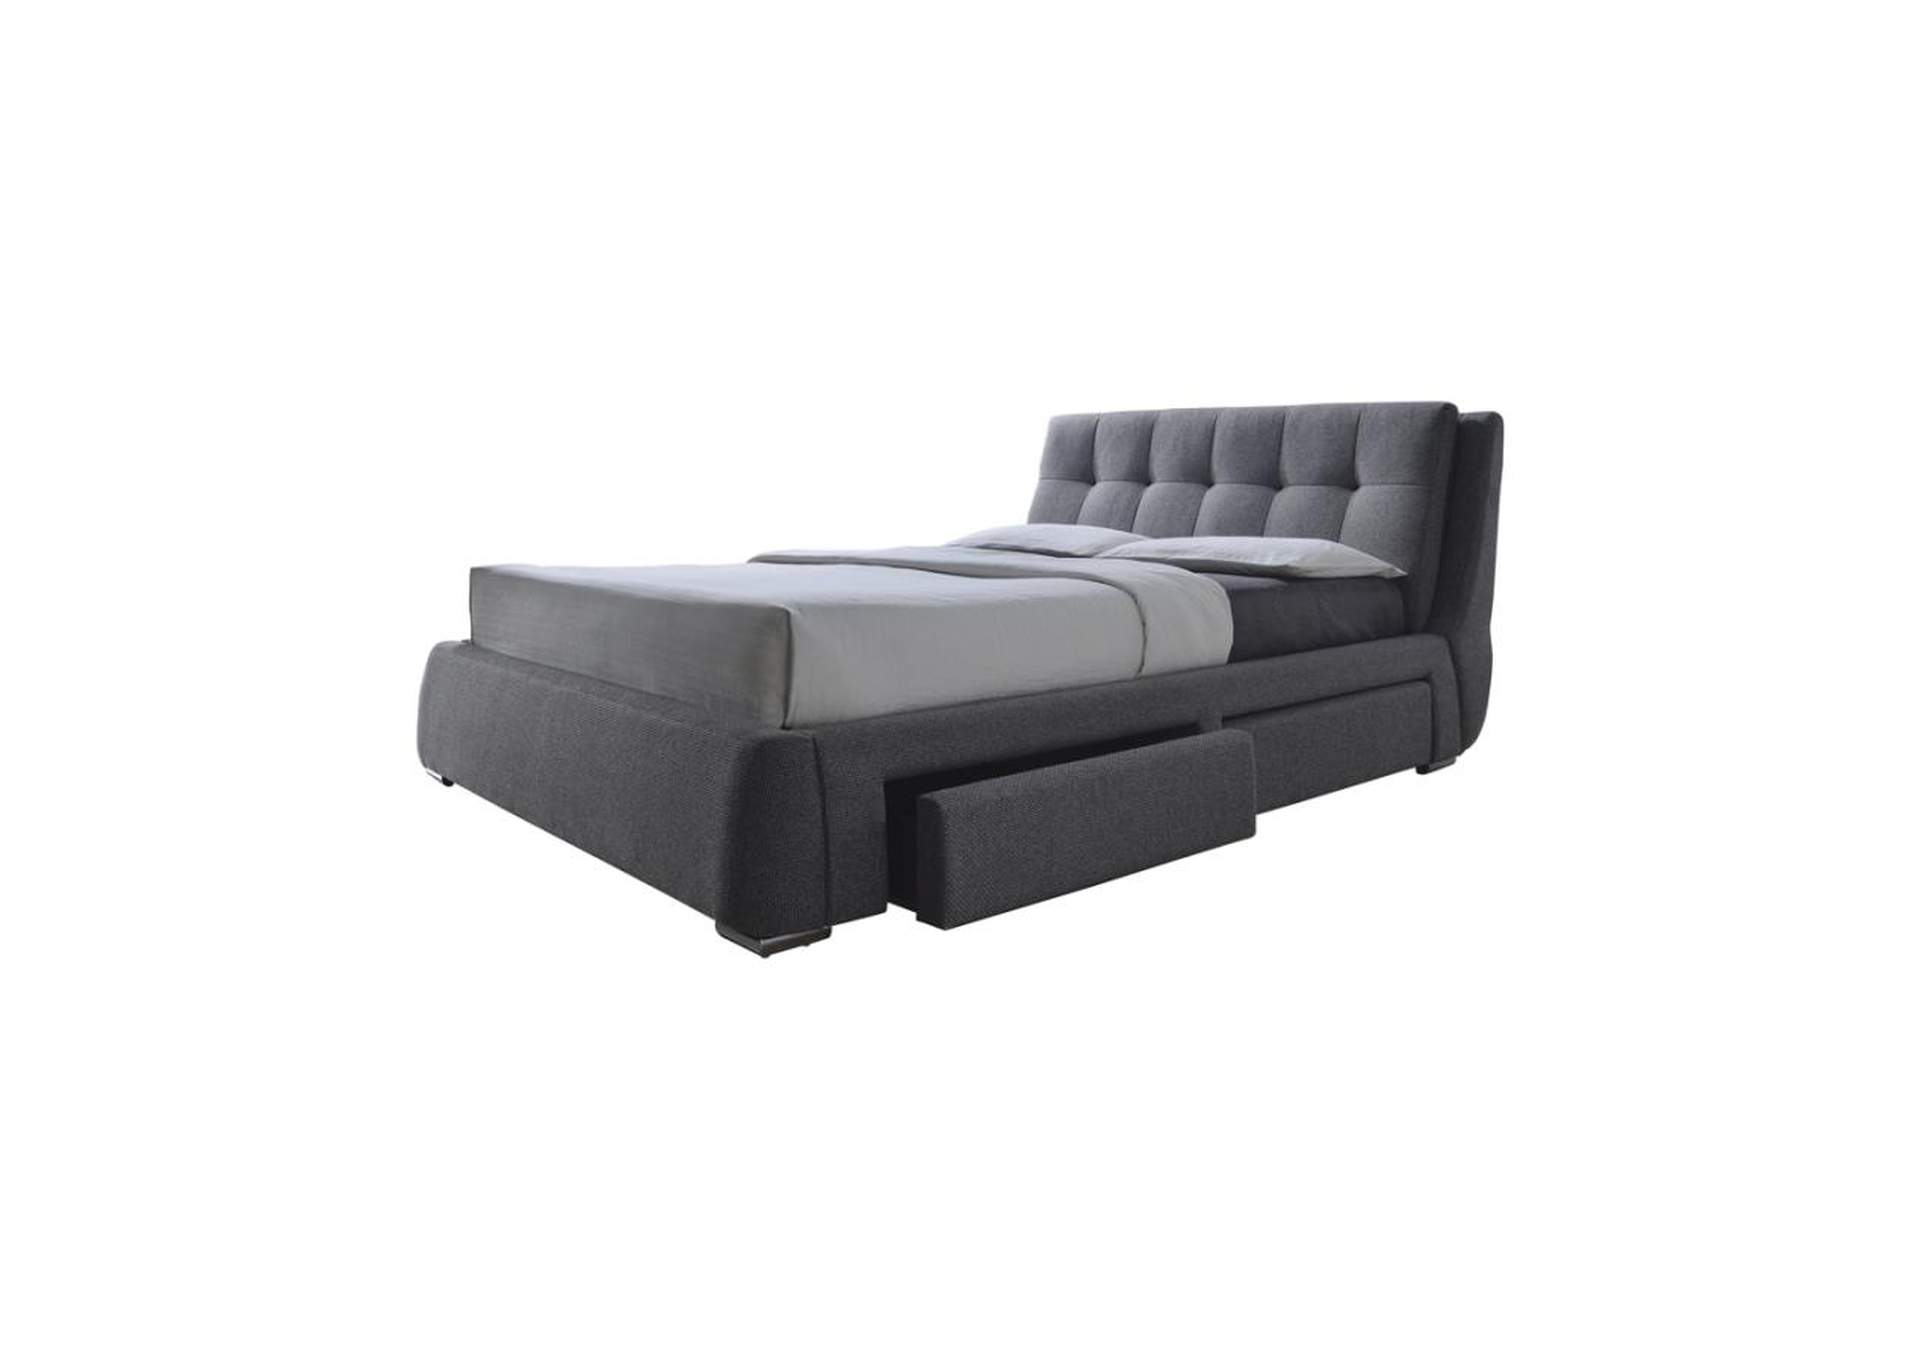 Fenbrook Queen Tufted Upholstered Storage Bed Grey,Coaster Furniture